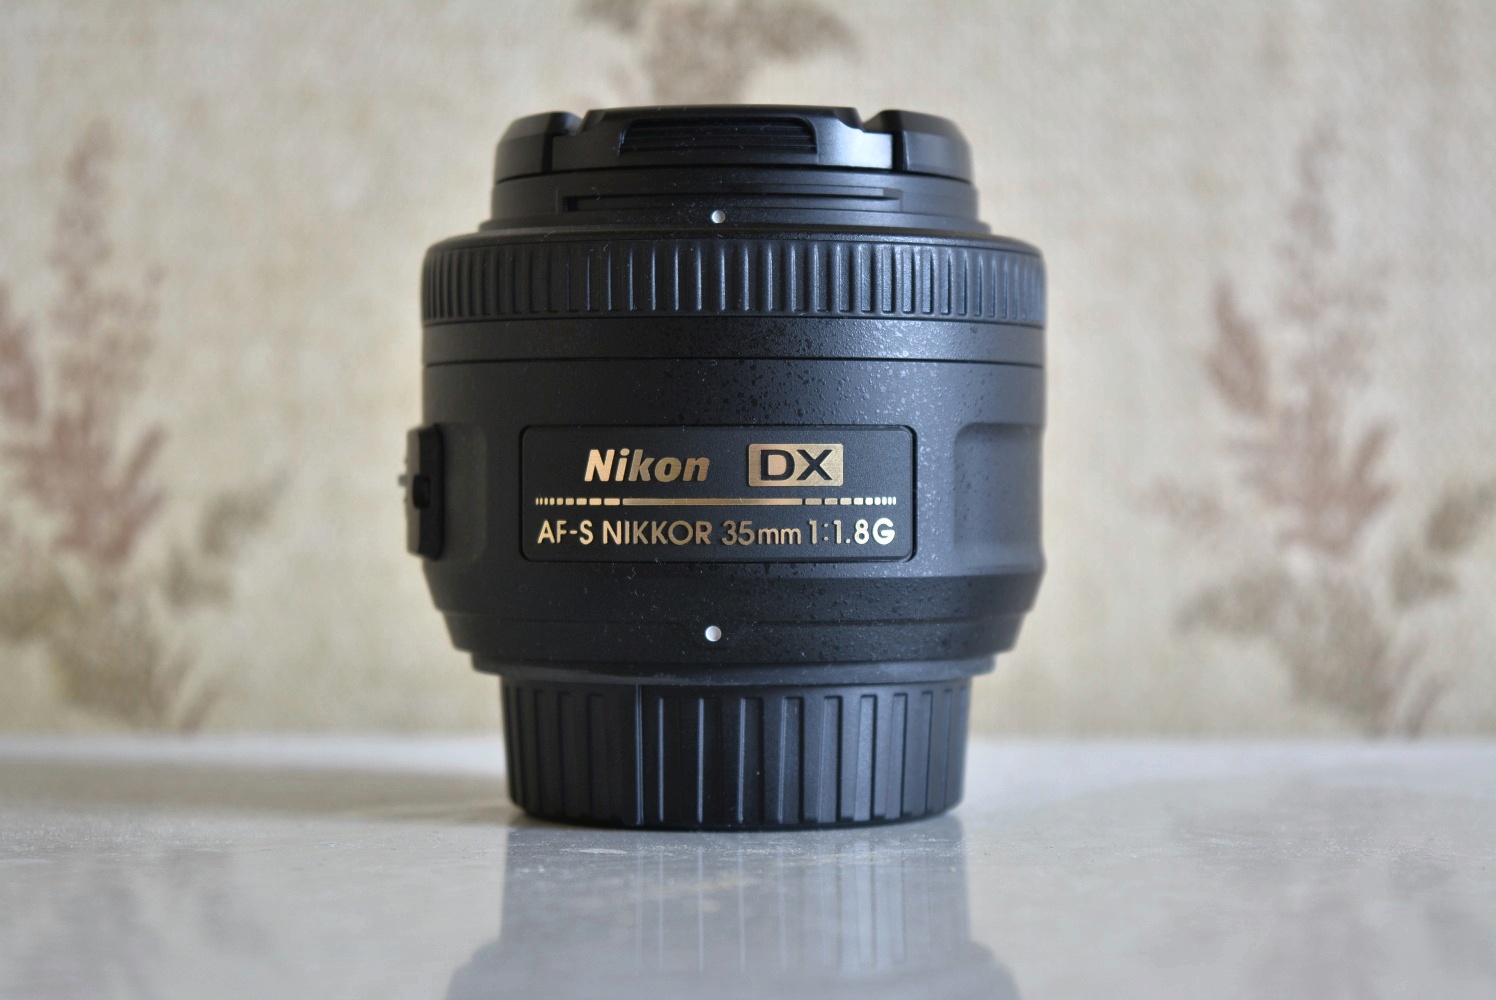 Nikon nikkor 35mm f 1.8 g. Nikon 35mm f/1.8g. Nikon 35mm f/1.8g af-s DX. Объектив Nikon 35mm f/1.8g af-s DX Nikkor. Nikon 35mm 1.8g DX.